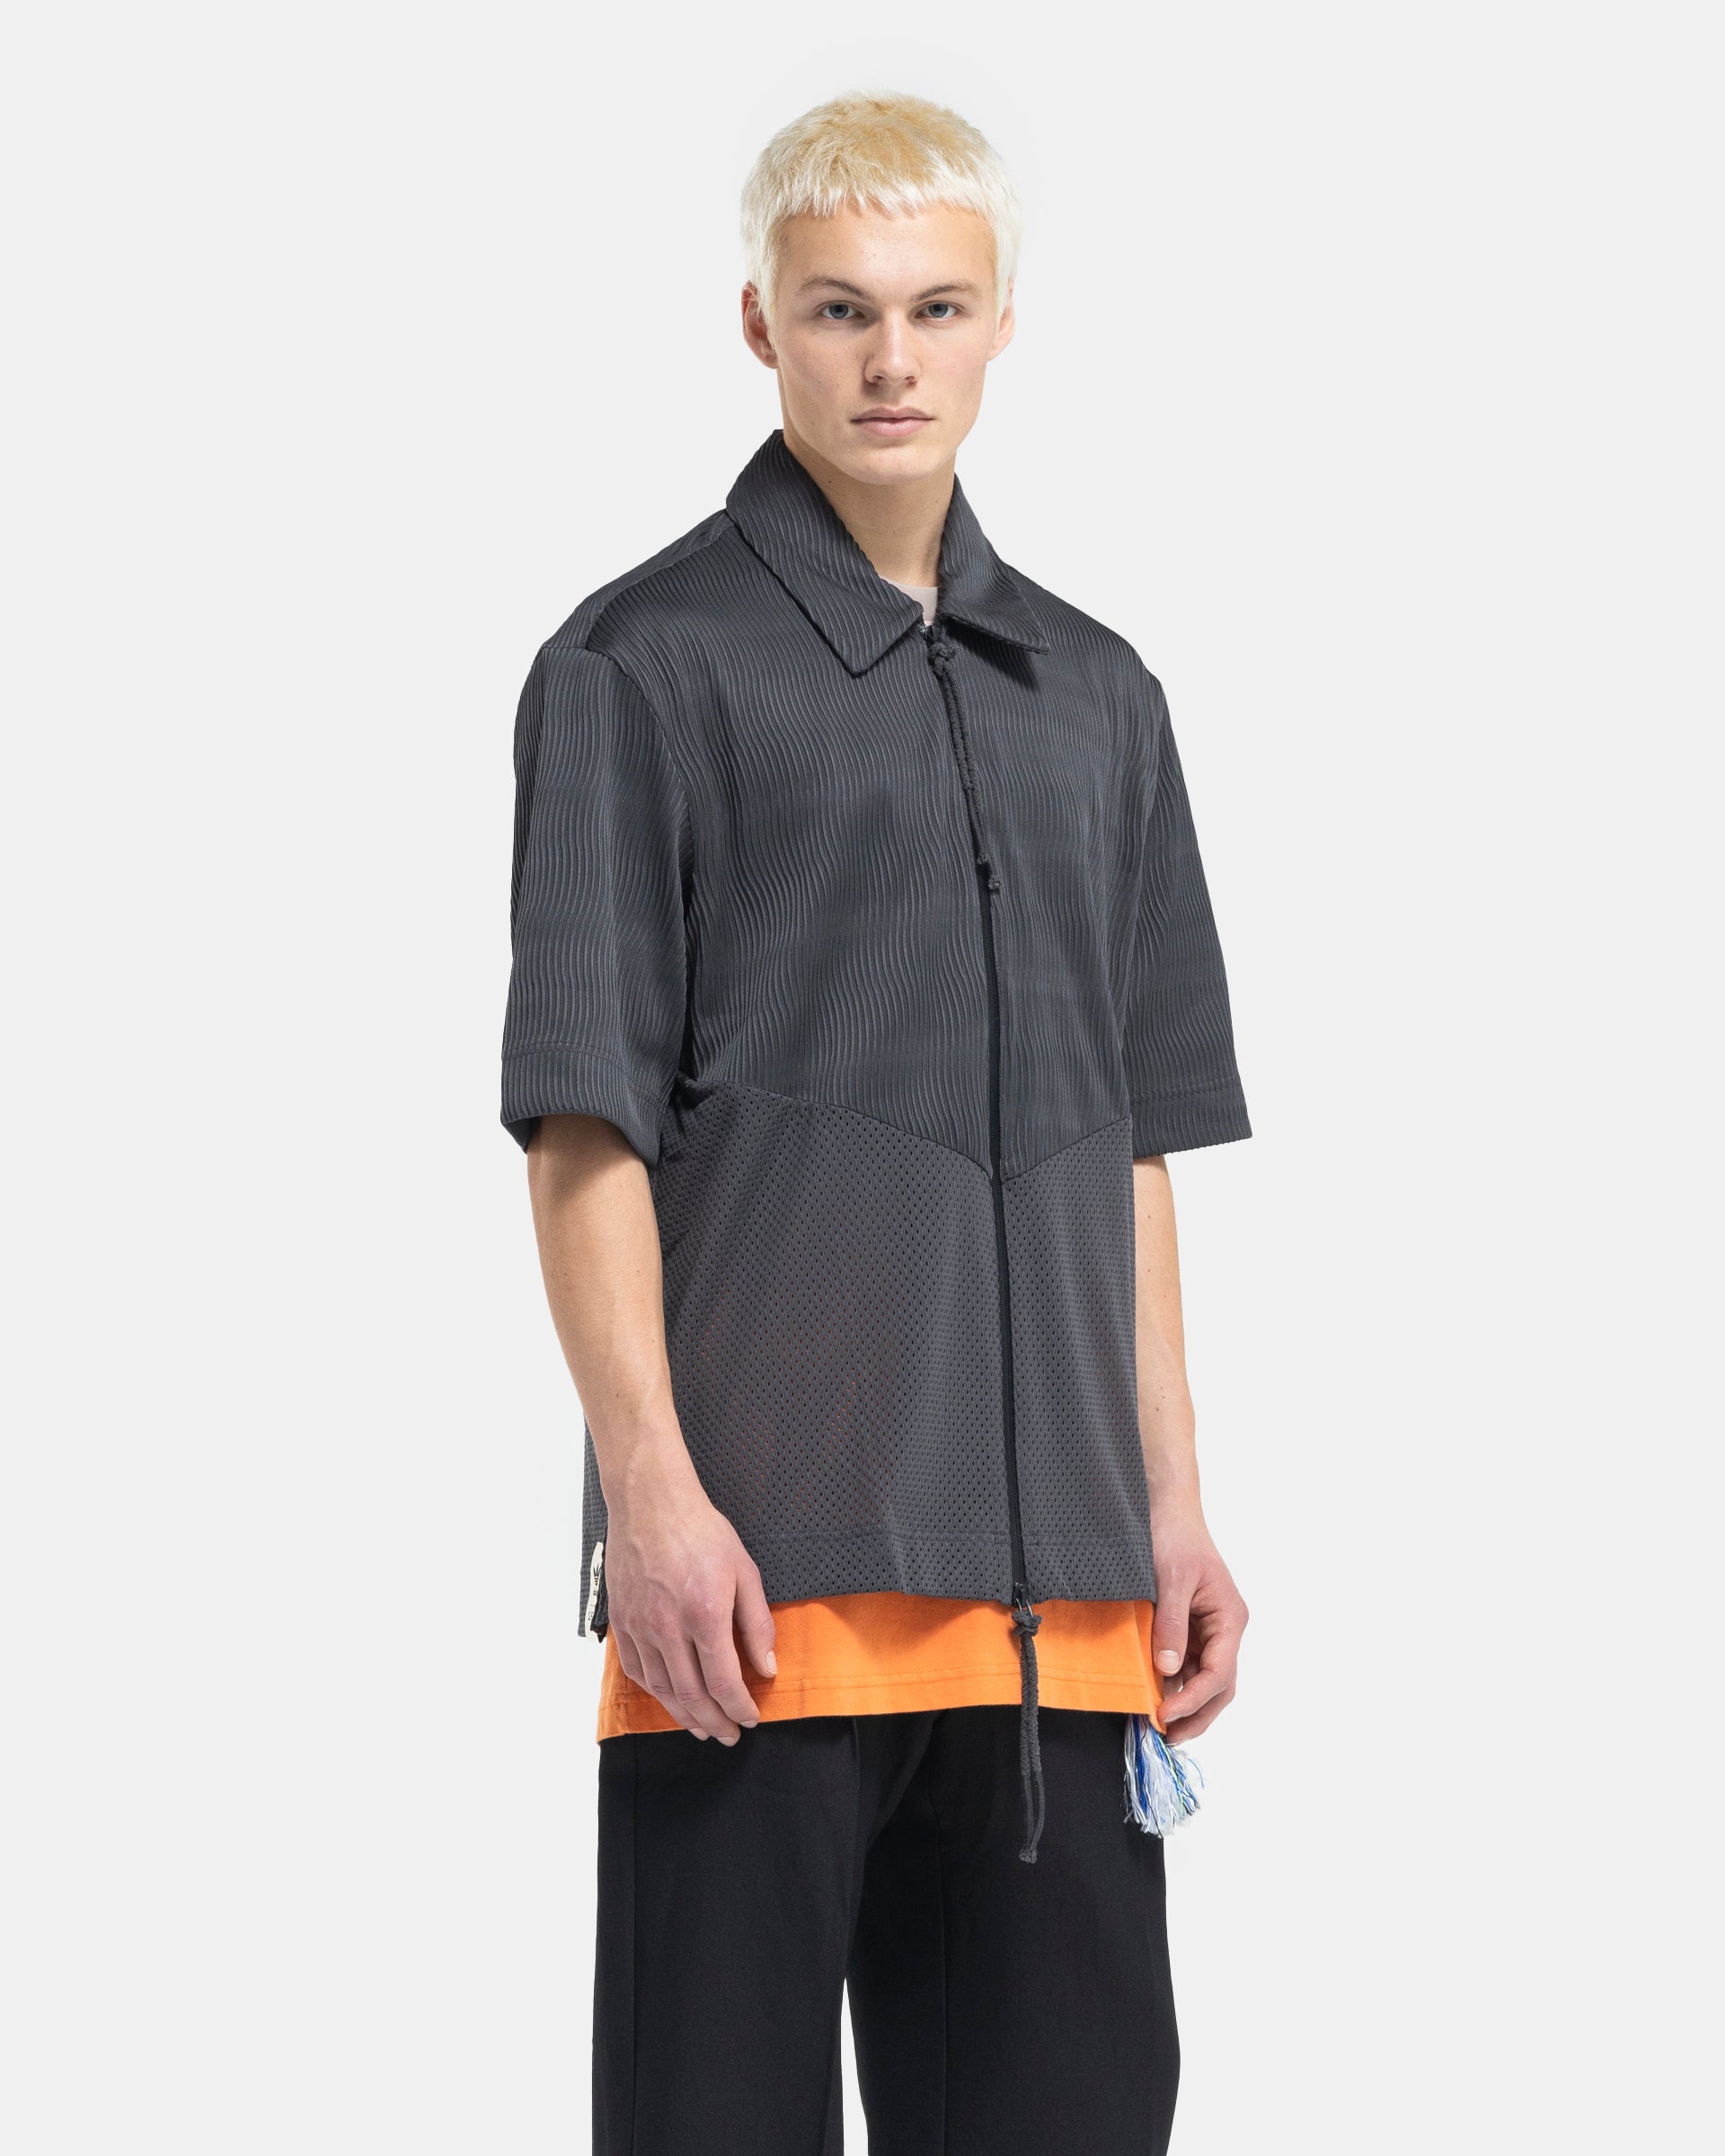 SFTM Short Sleeve Shirt in Charcoal